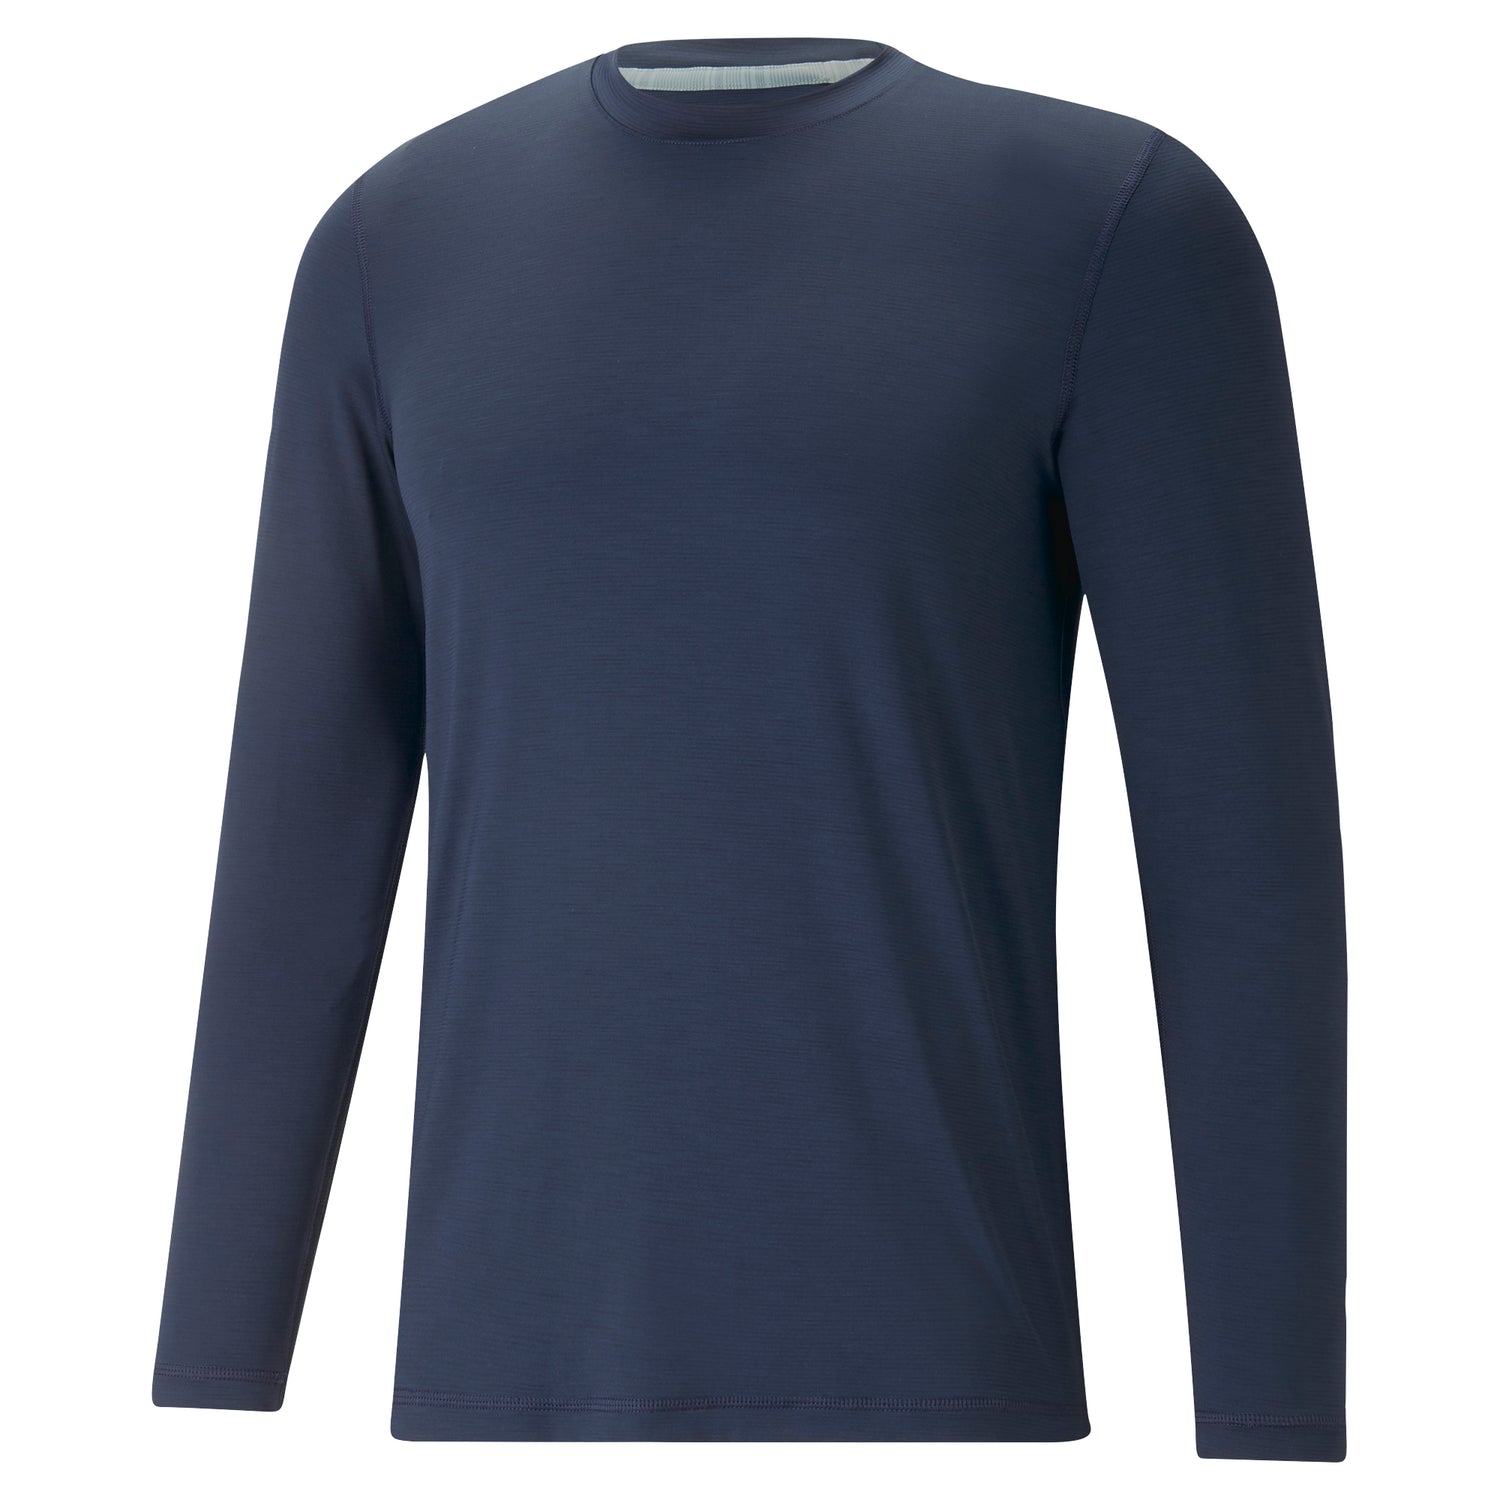 ZRBYWB Golf Shirts For Men Zipper Long Sleeve Solid Shirt Outdoor